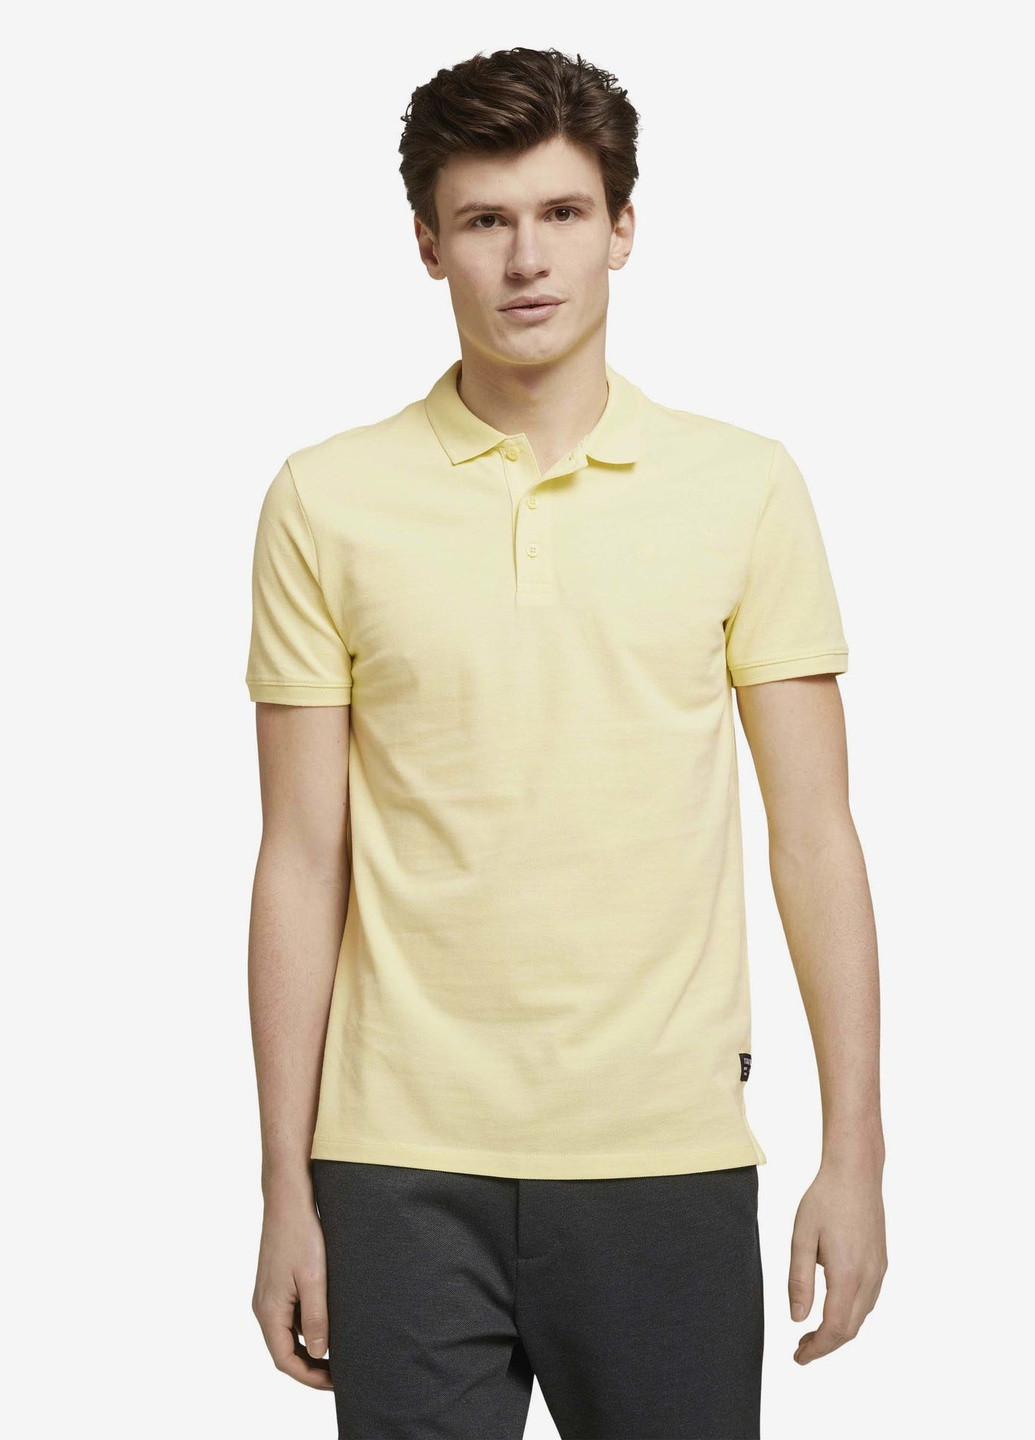 Желтая футболка-поло для мужчин Tom Tailor